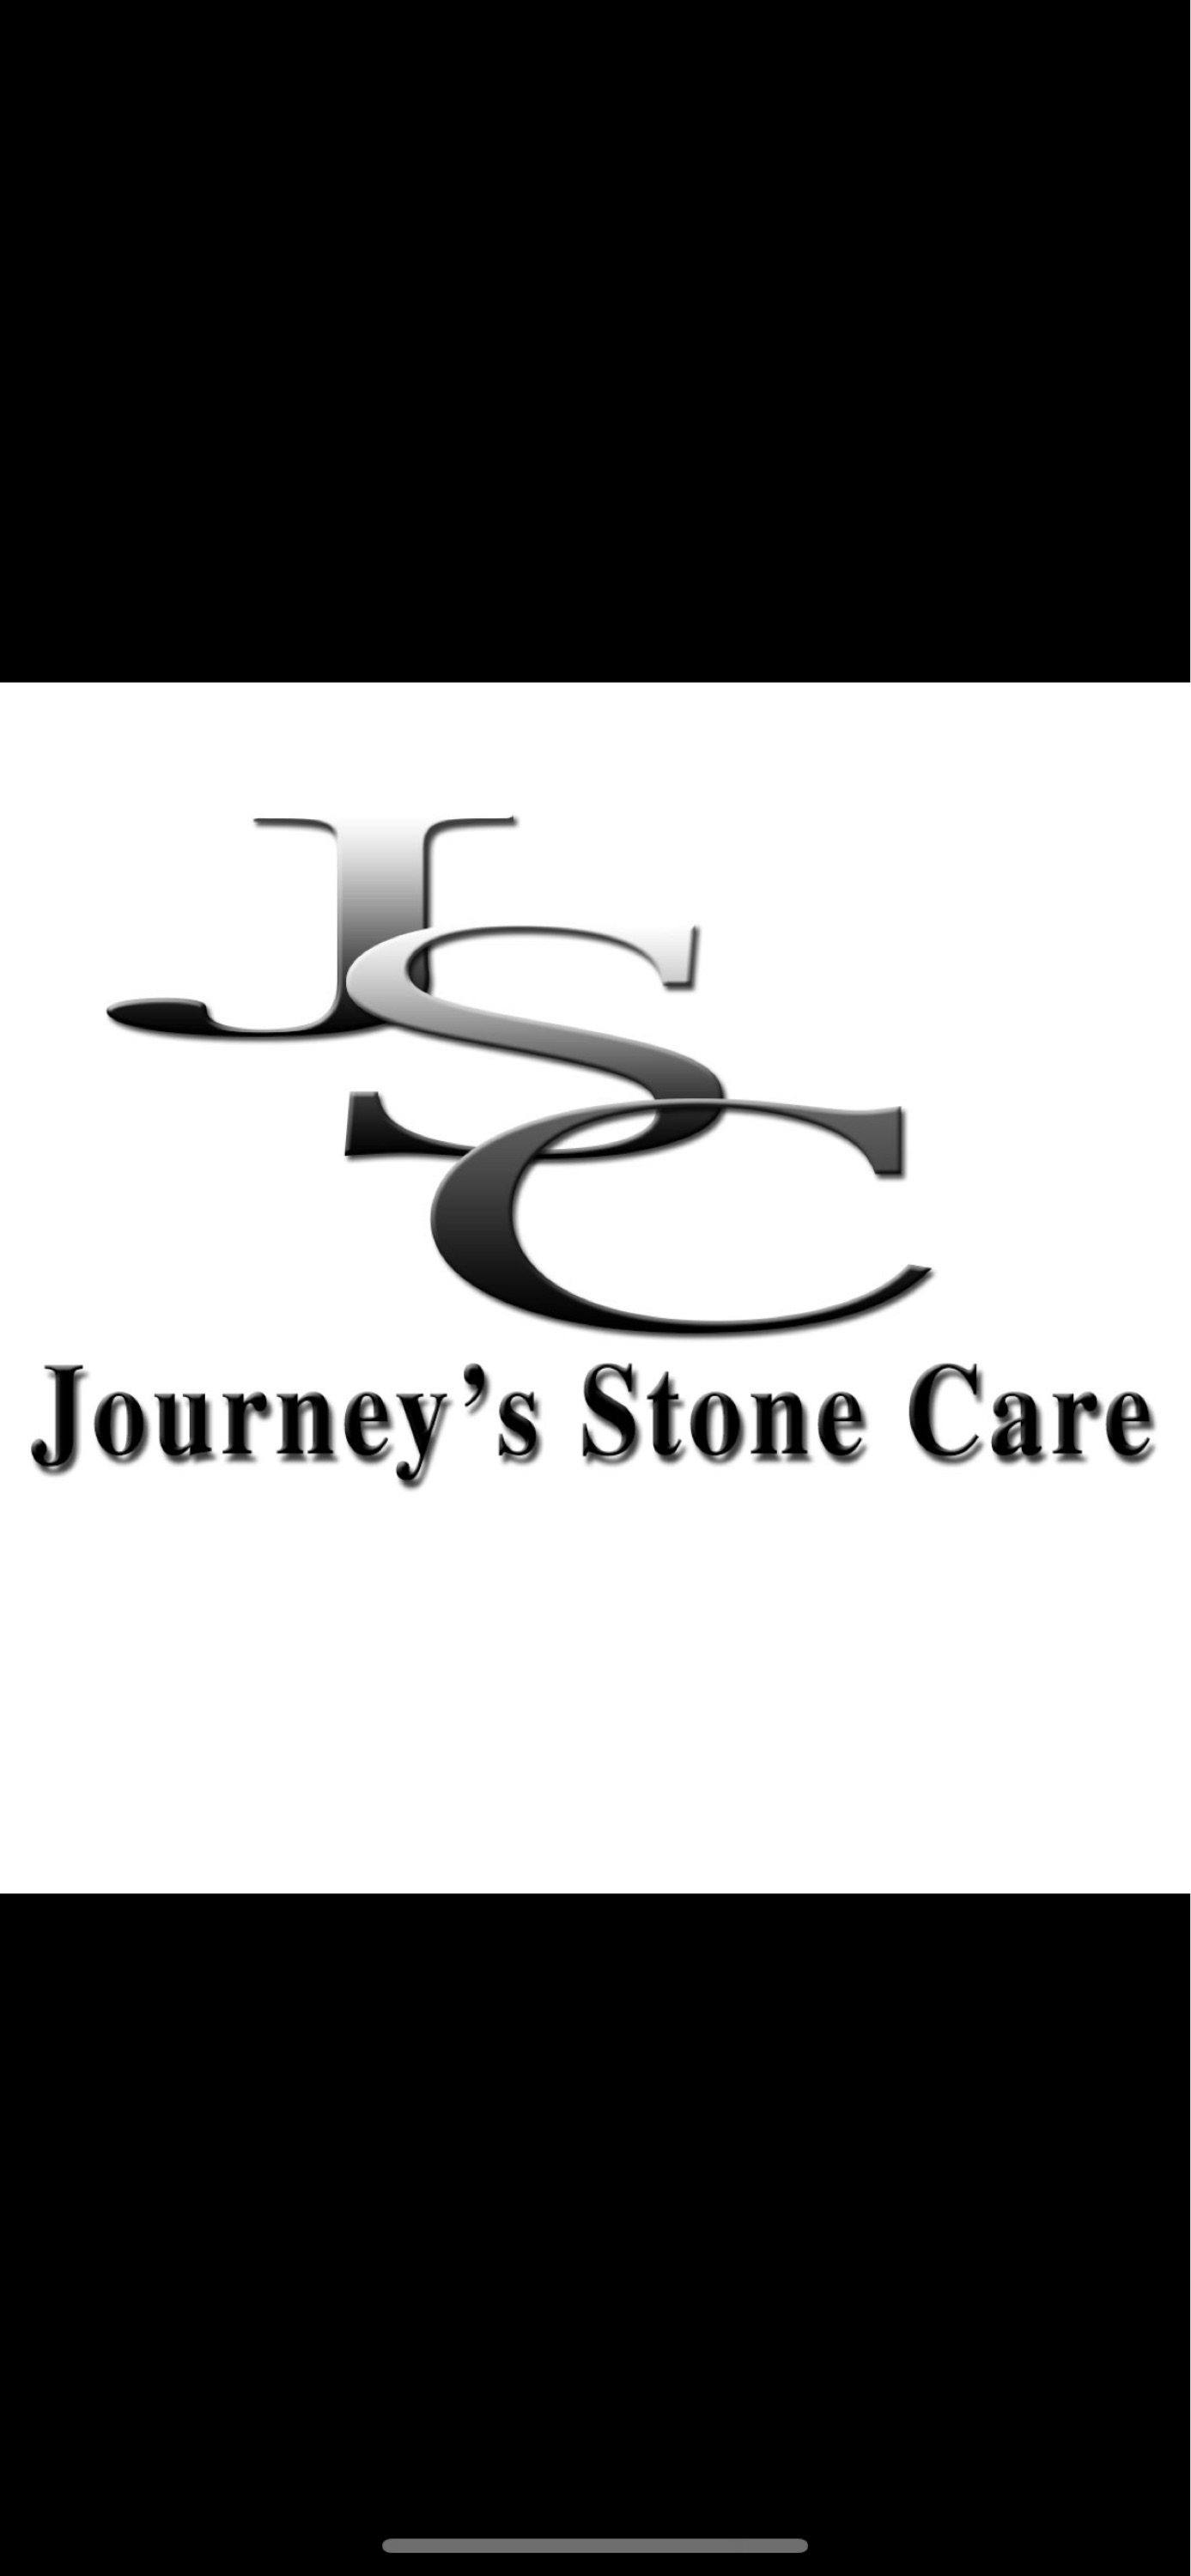 Journey's Stone Care Logo